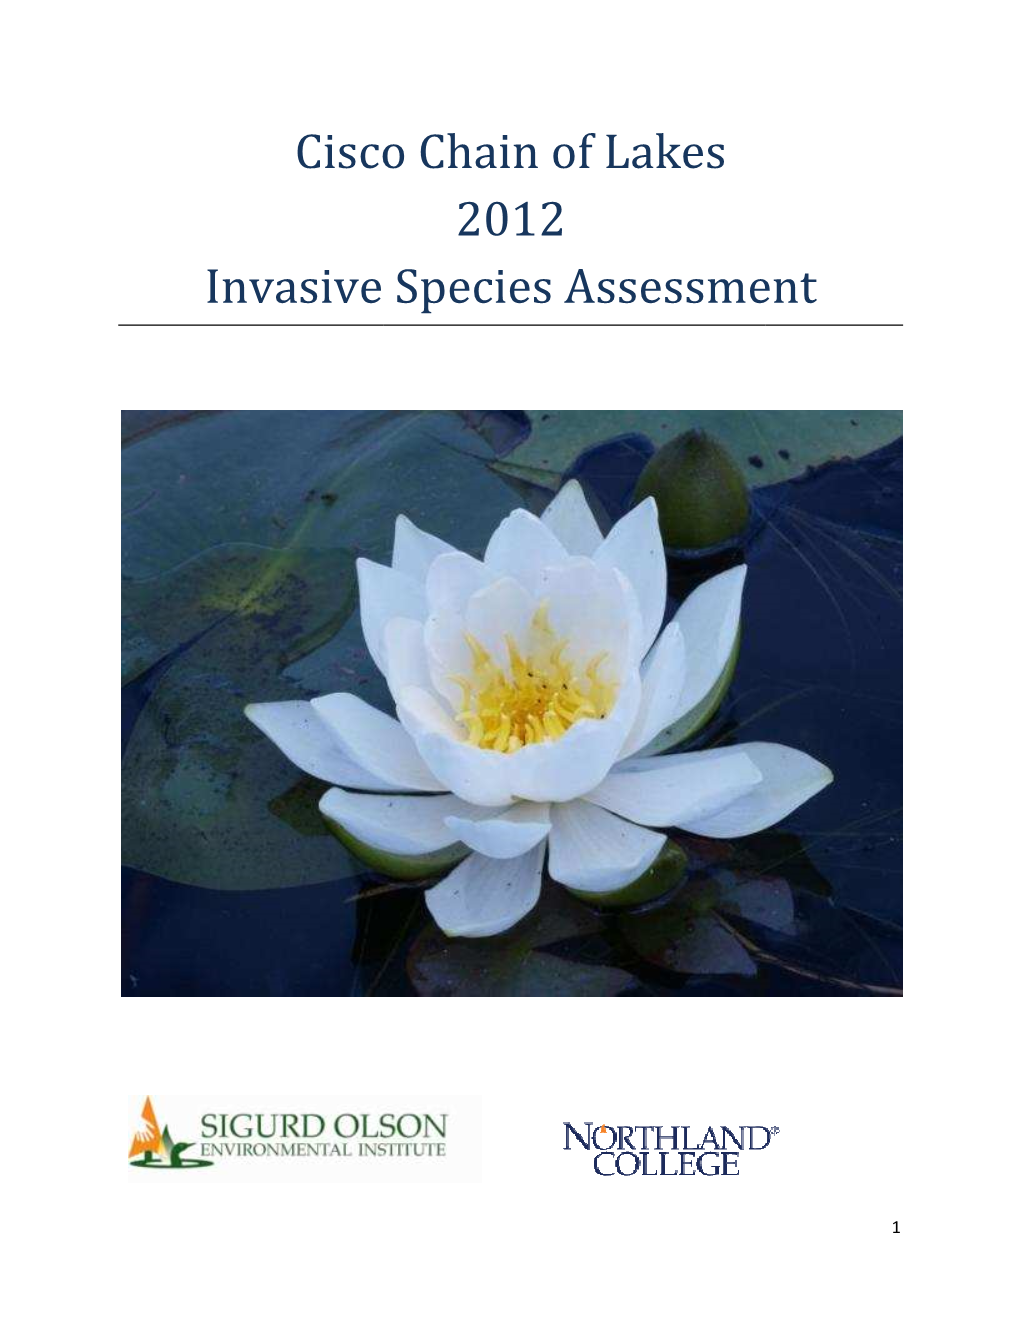 Cisco Chain of Lakes Invasive Species Assessment